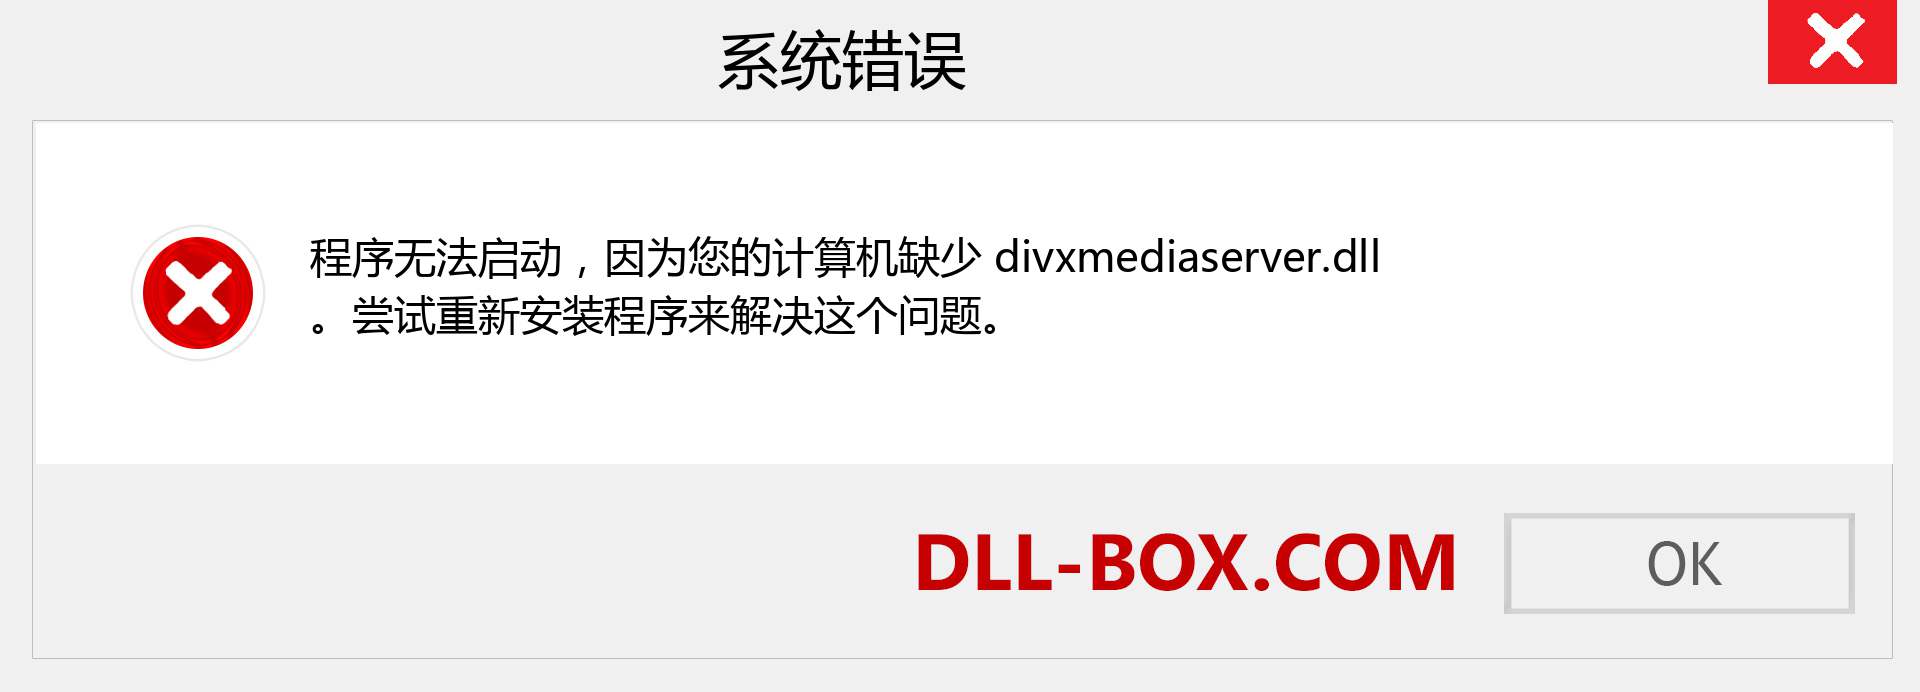 divxmediaserver.dll 文件丢失？。 适用于 Windows 7、8、10 的下载 - 修复 Windows、照片、图像上的 divxmediaserver dll 丢失错误